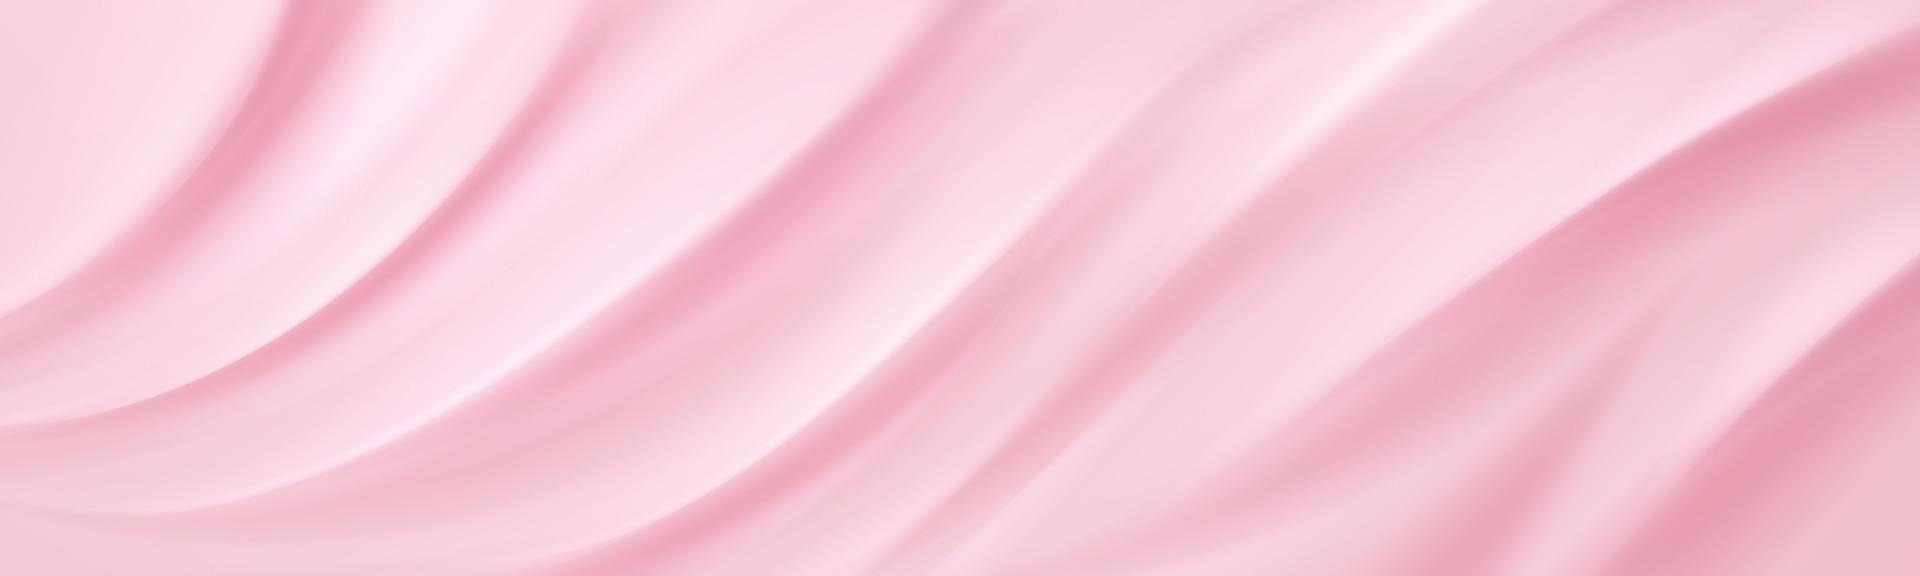 cremefarbene Textur, rosafarbener Hintergrund aus Kosmetikgel vektor